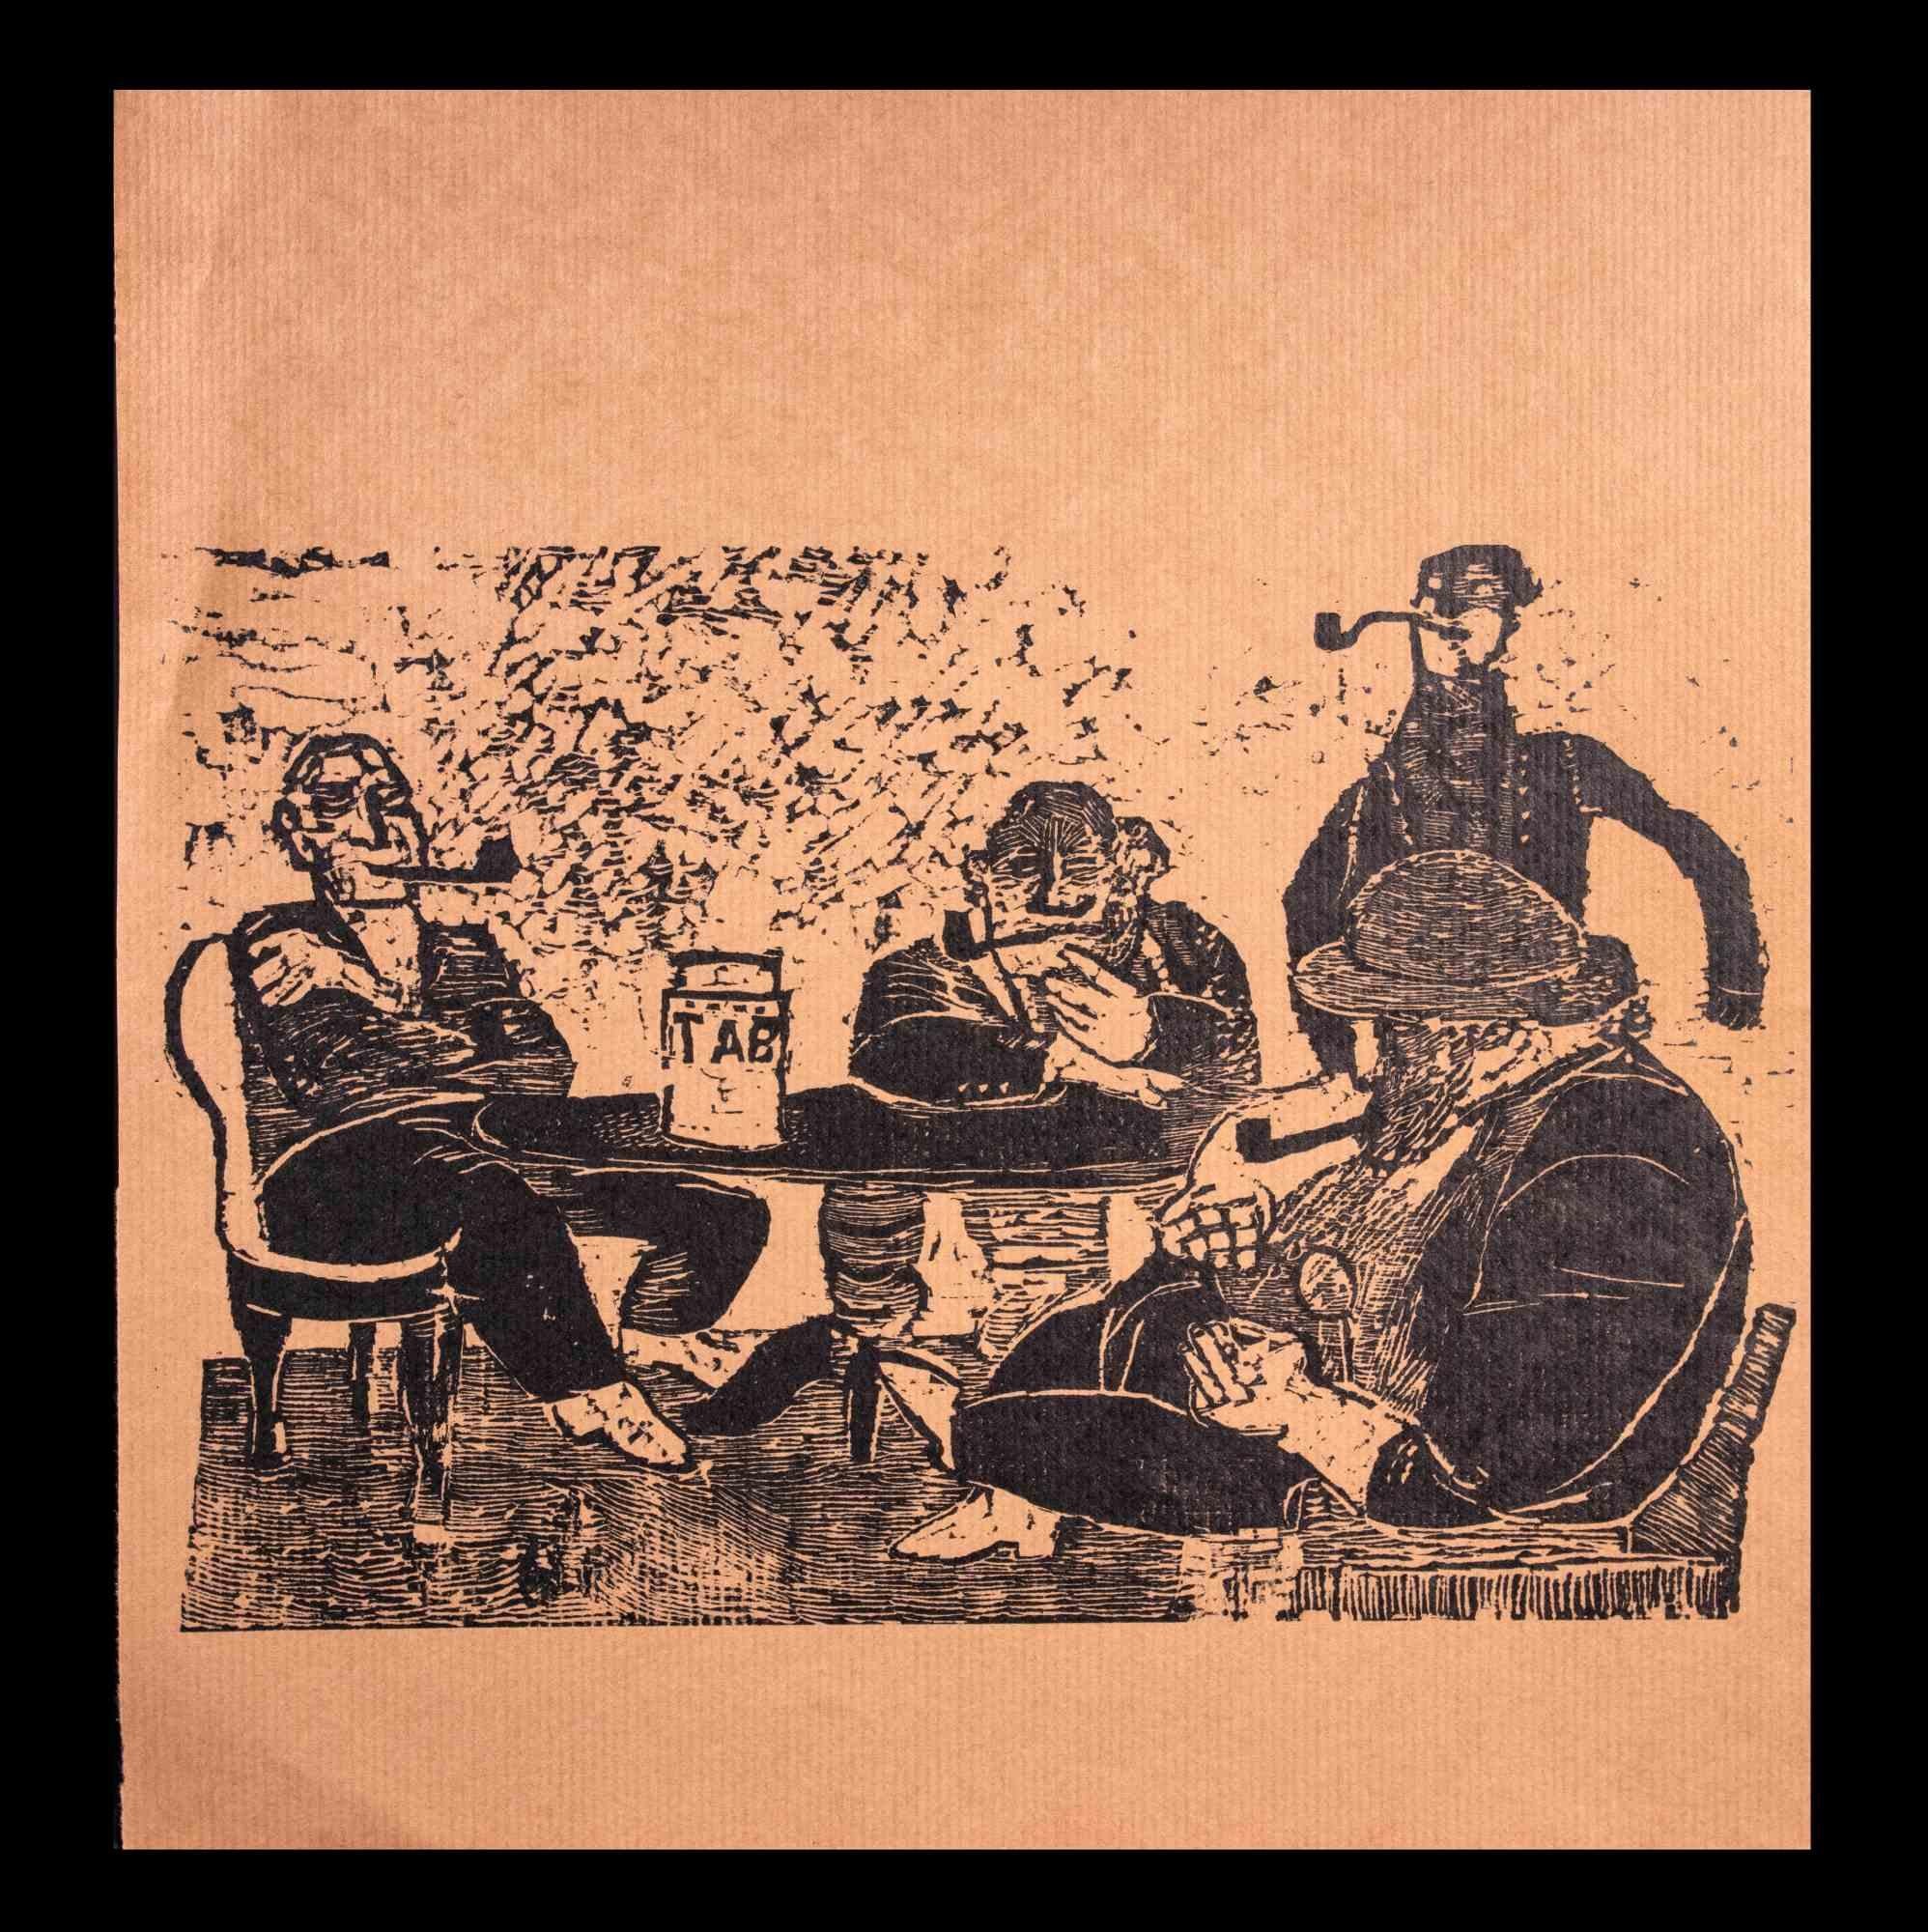 Men Who Smoke the Pipe - Original Woodcut print  - Early 20th century